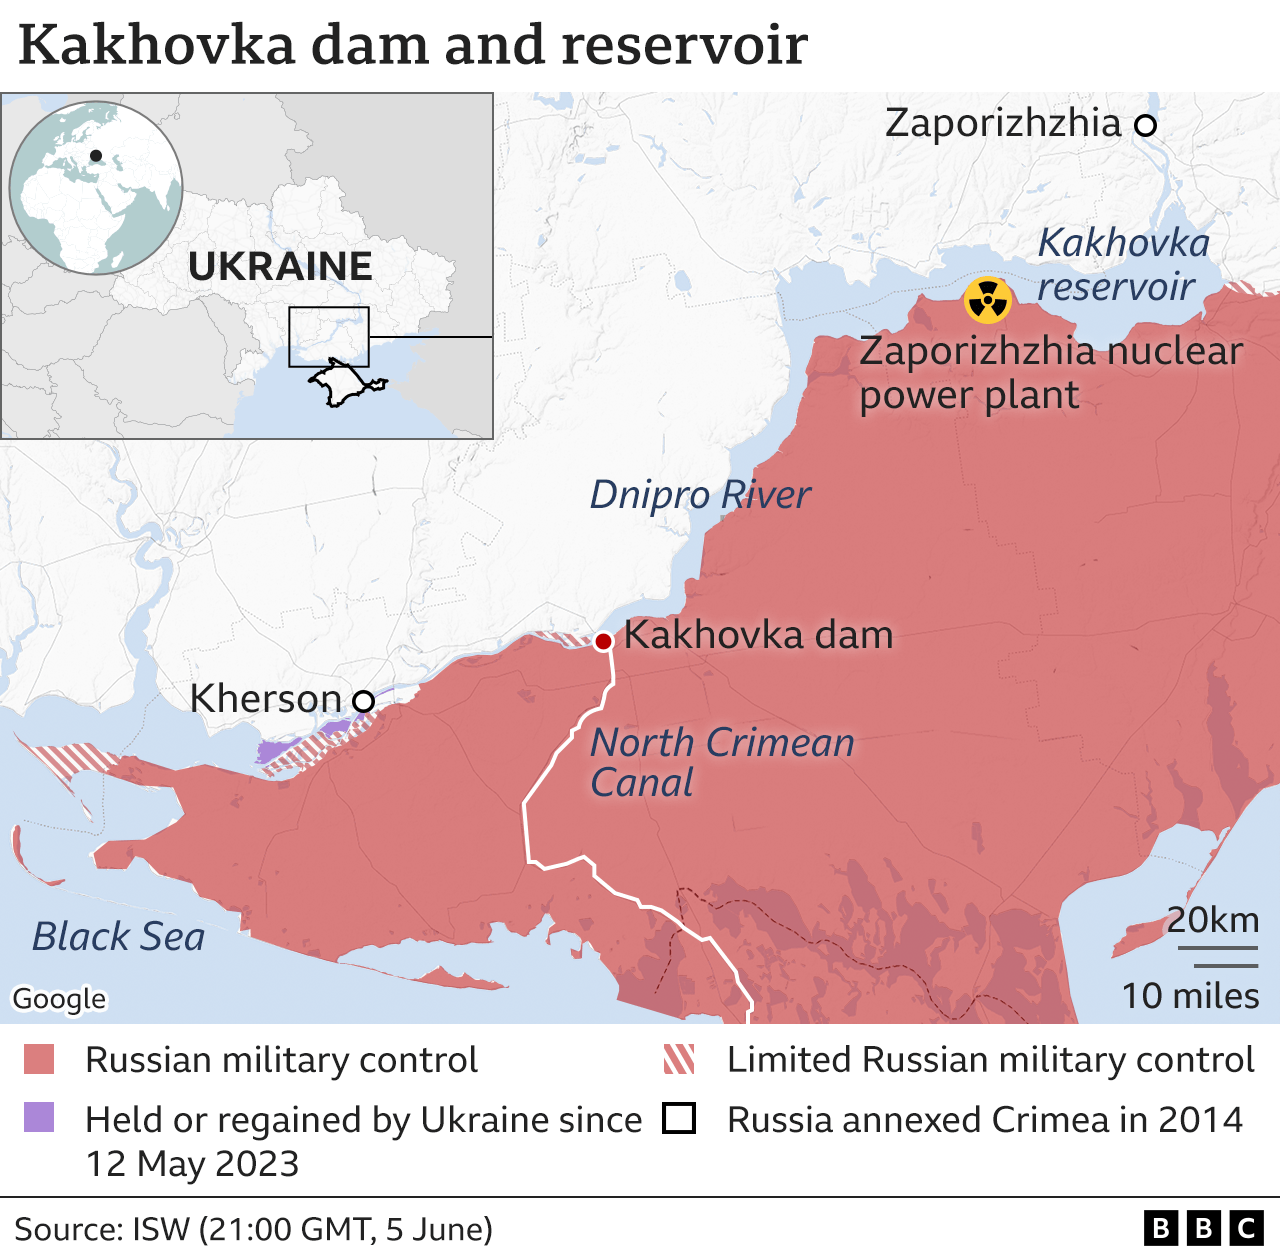 A map showing the Zaporizhzhia power plant and the Kakhova dam in Ukraine